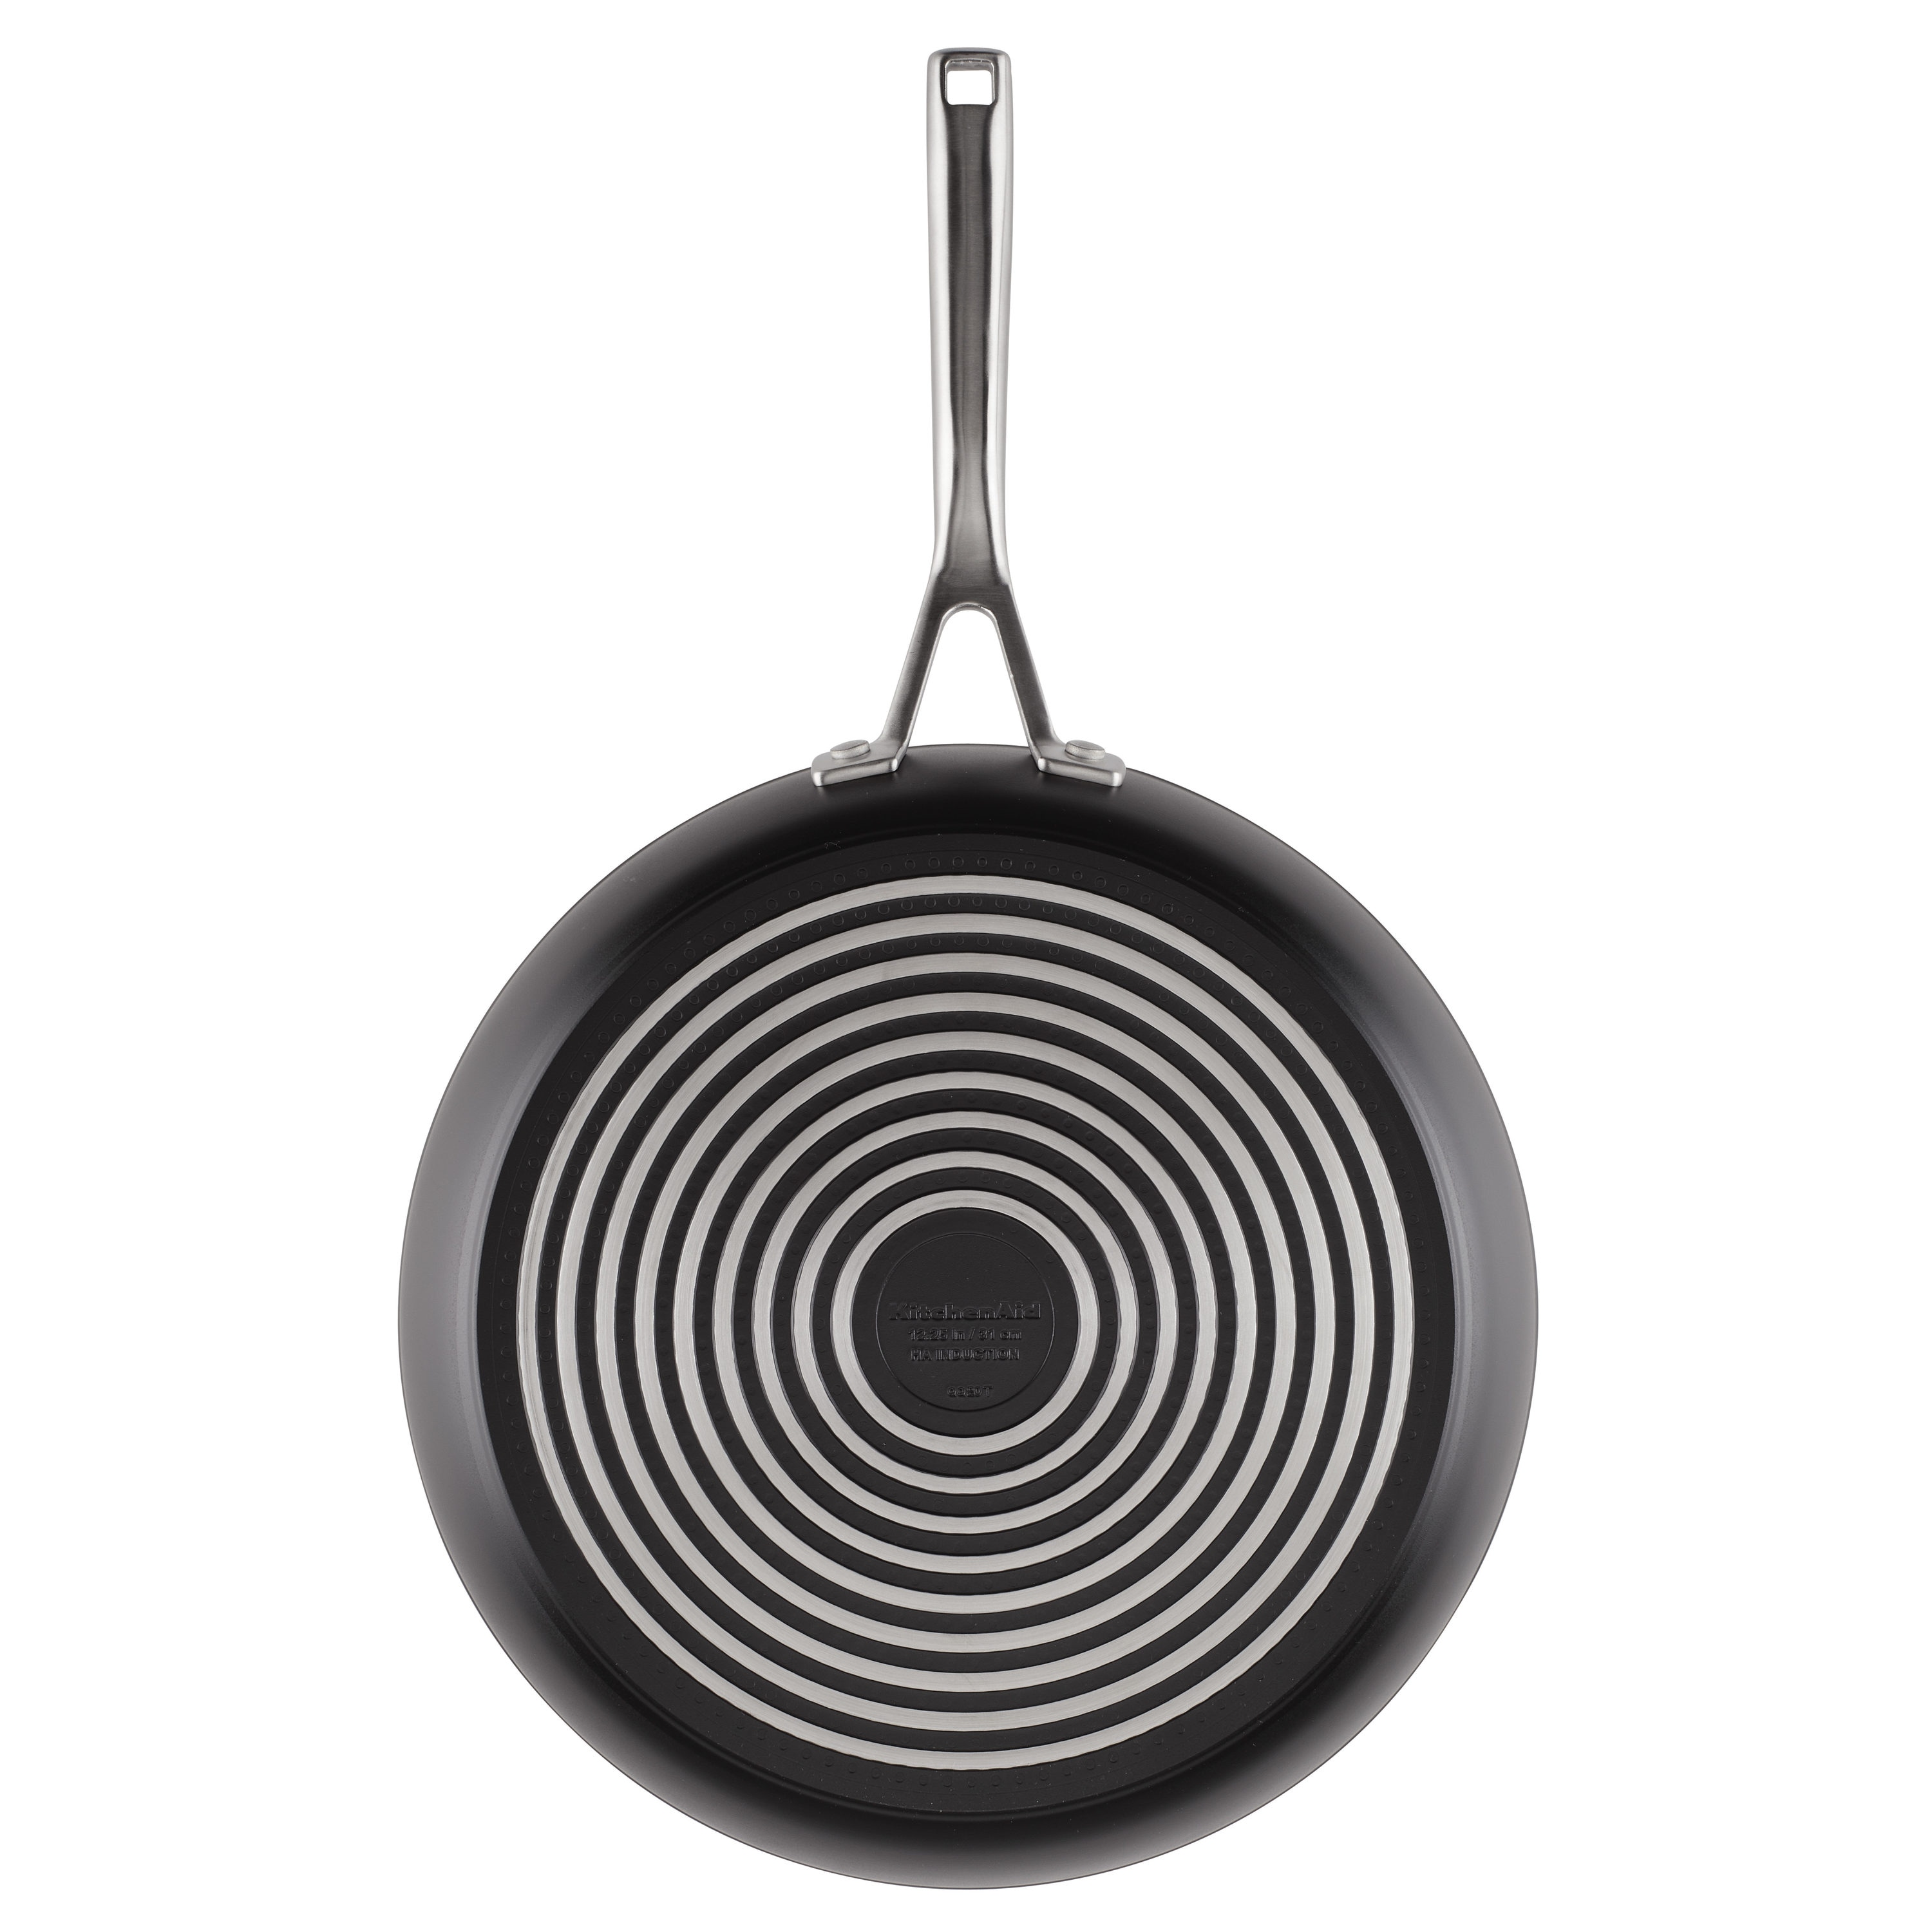 KitchenAid Classic Frying Pan review - Reviews